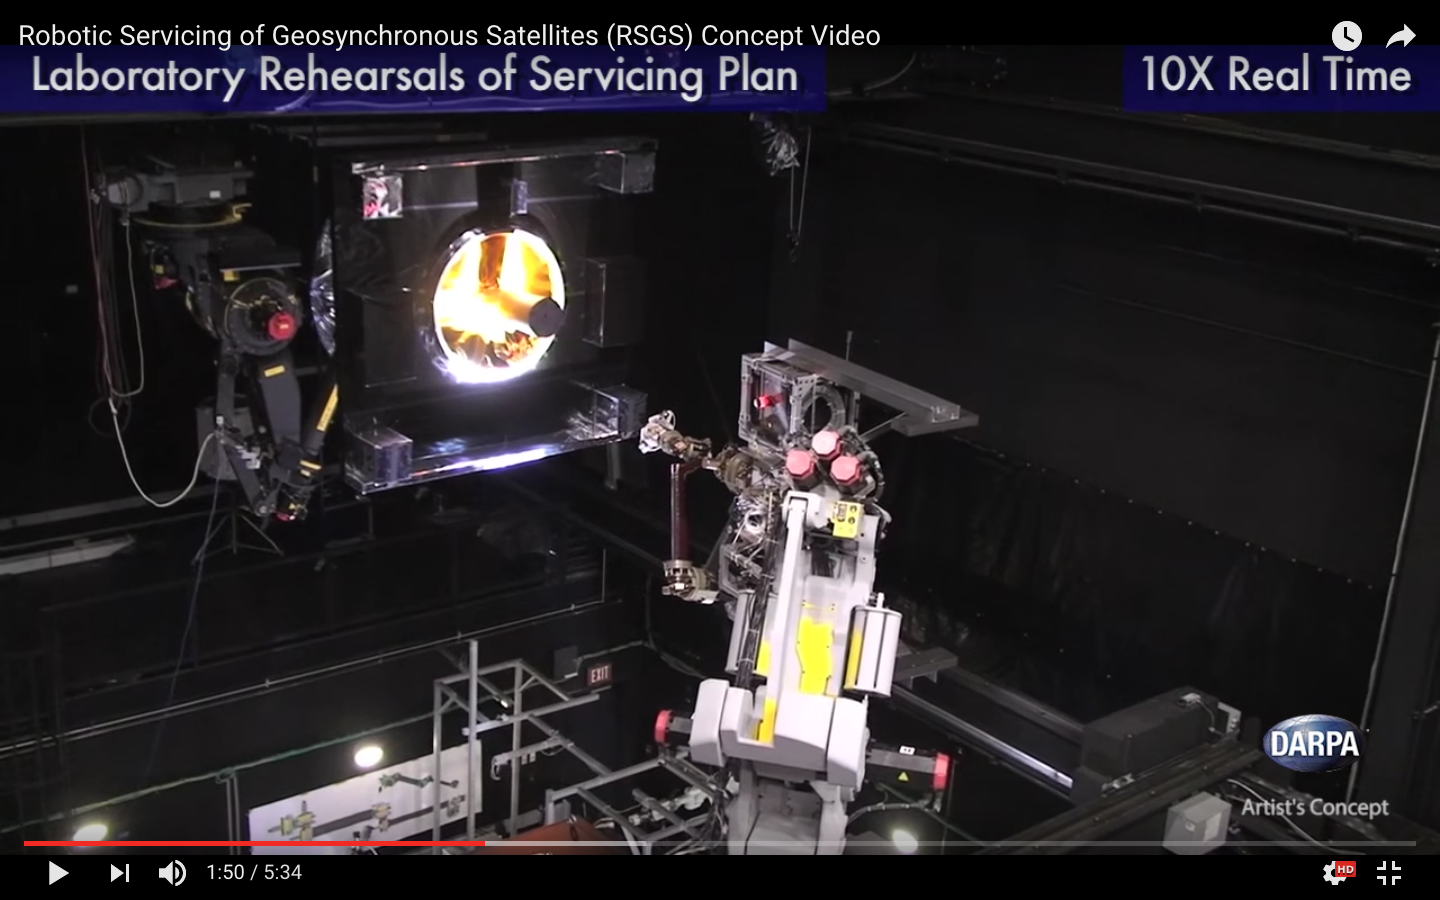 Lawmakers Call For Halt To DARPA Program: Robots Repairing Satellites